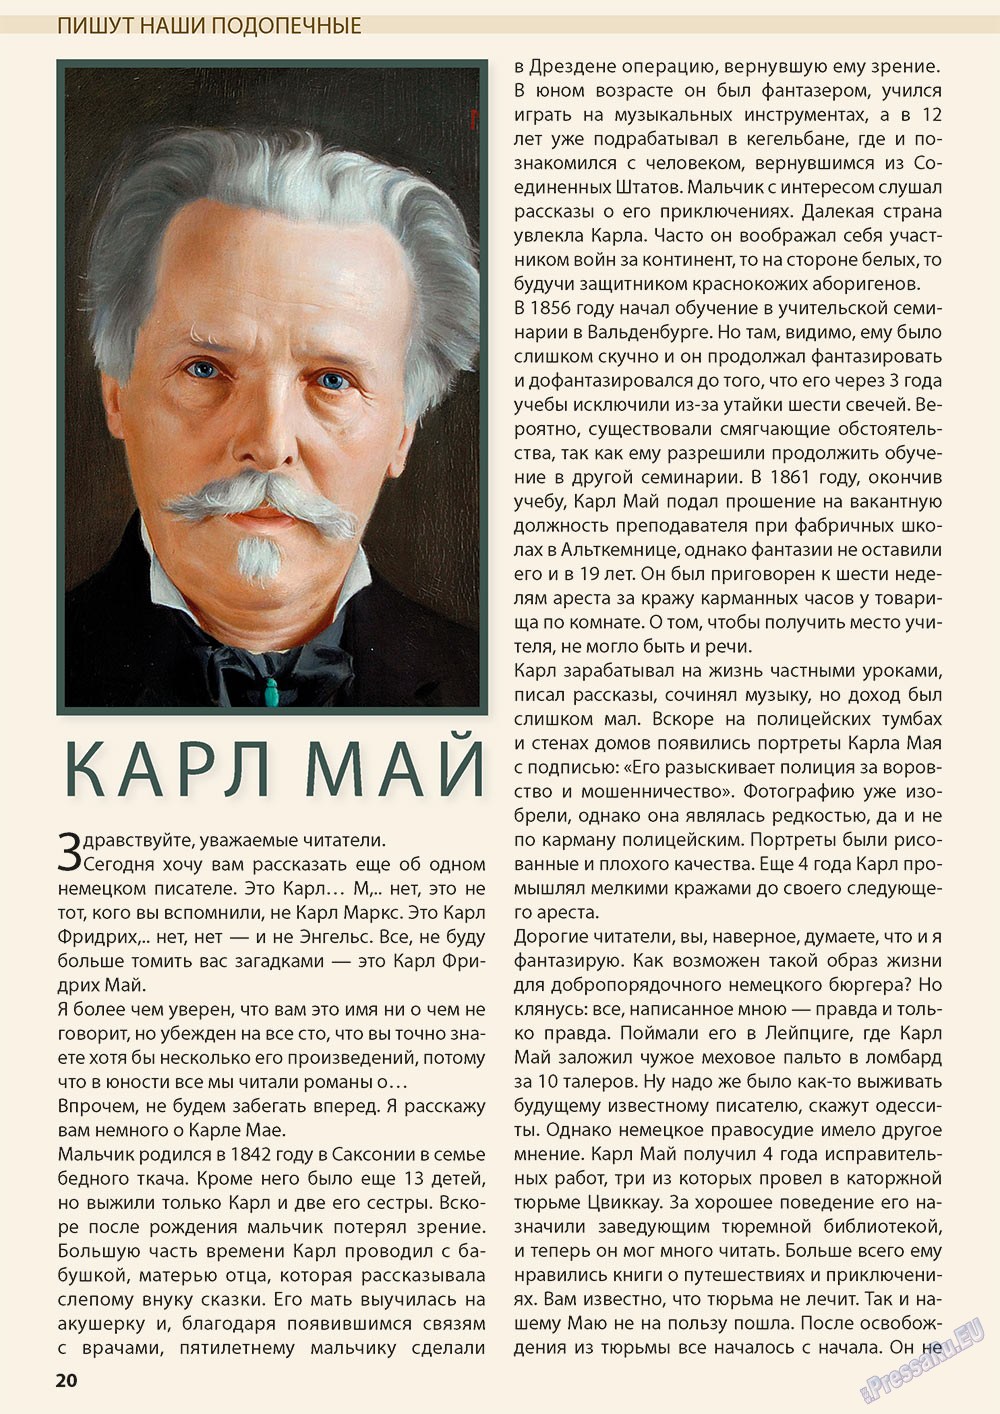 Wadim, журнал. 2013 №2 стр.20